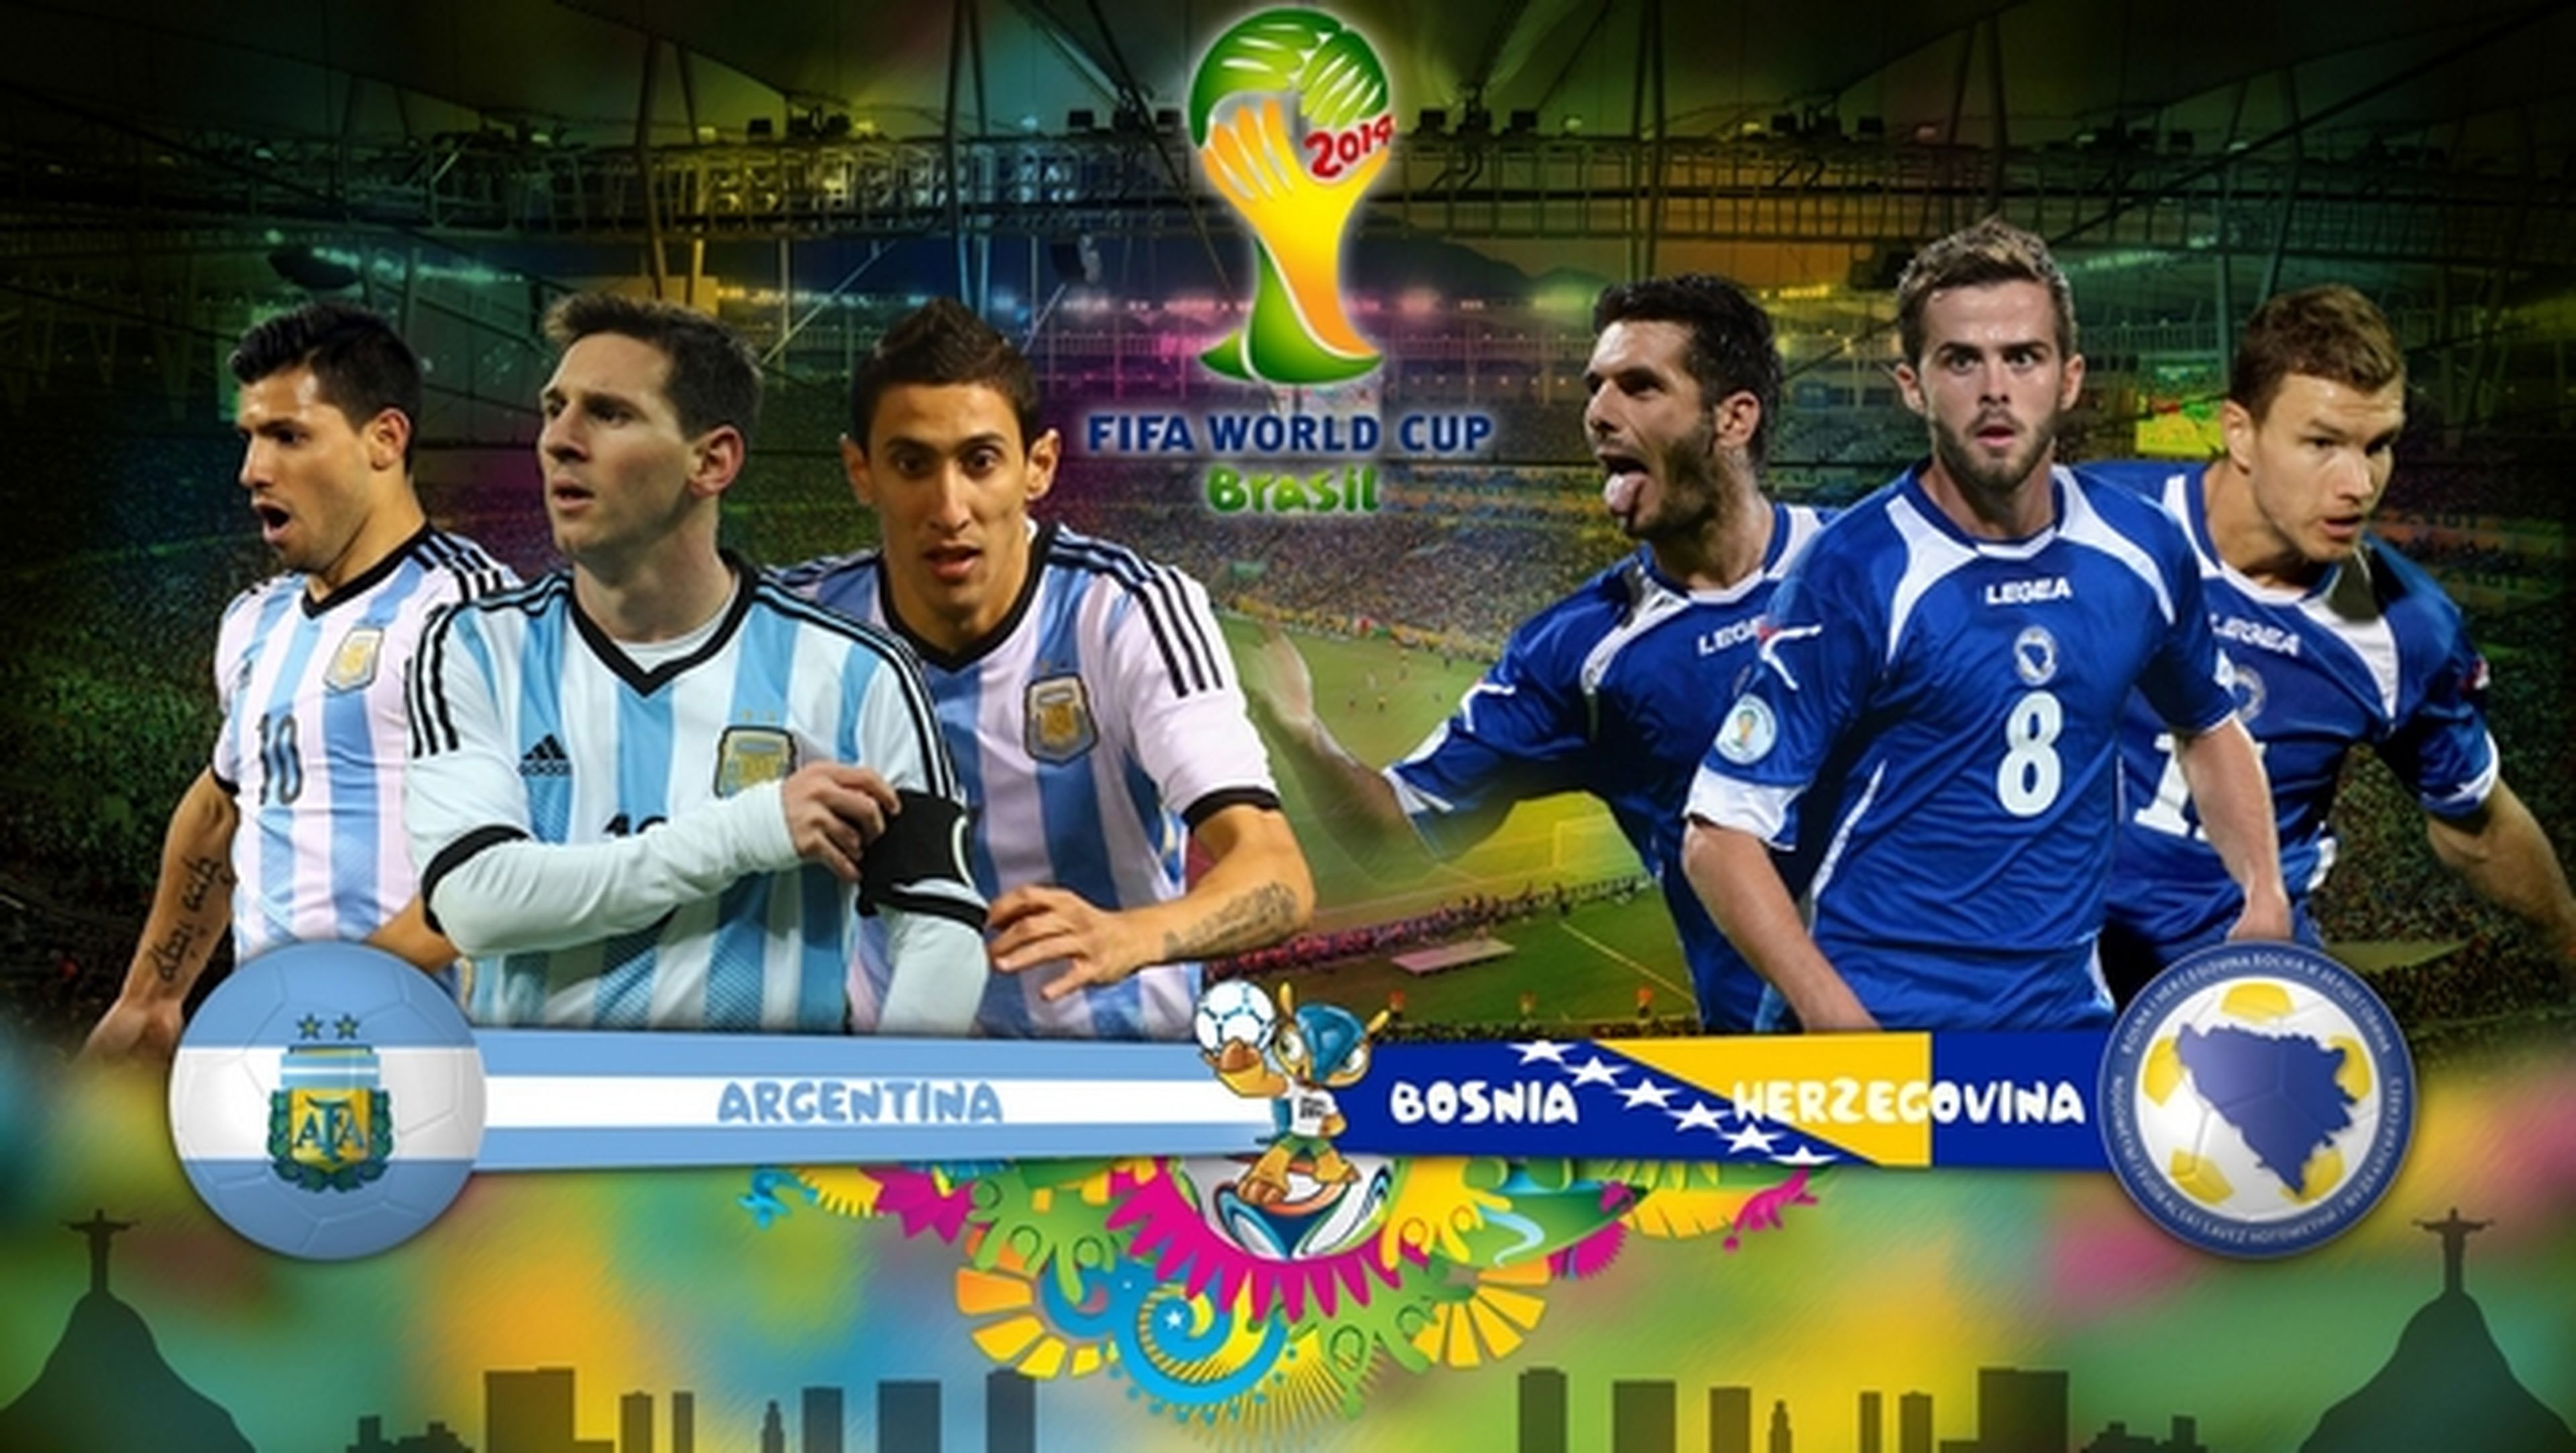 Dónde ver online partido del Mundial: Argentina - Bosnia